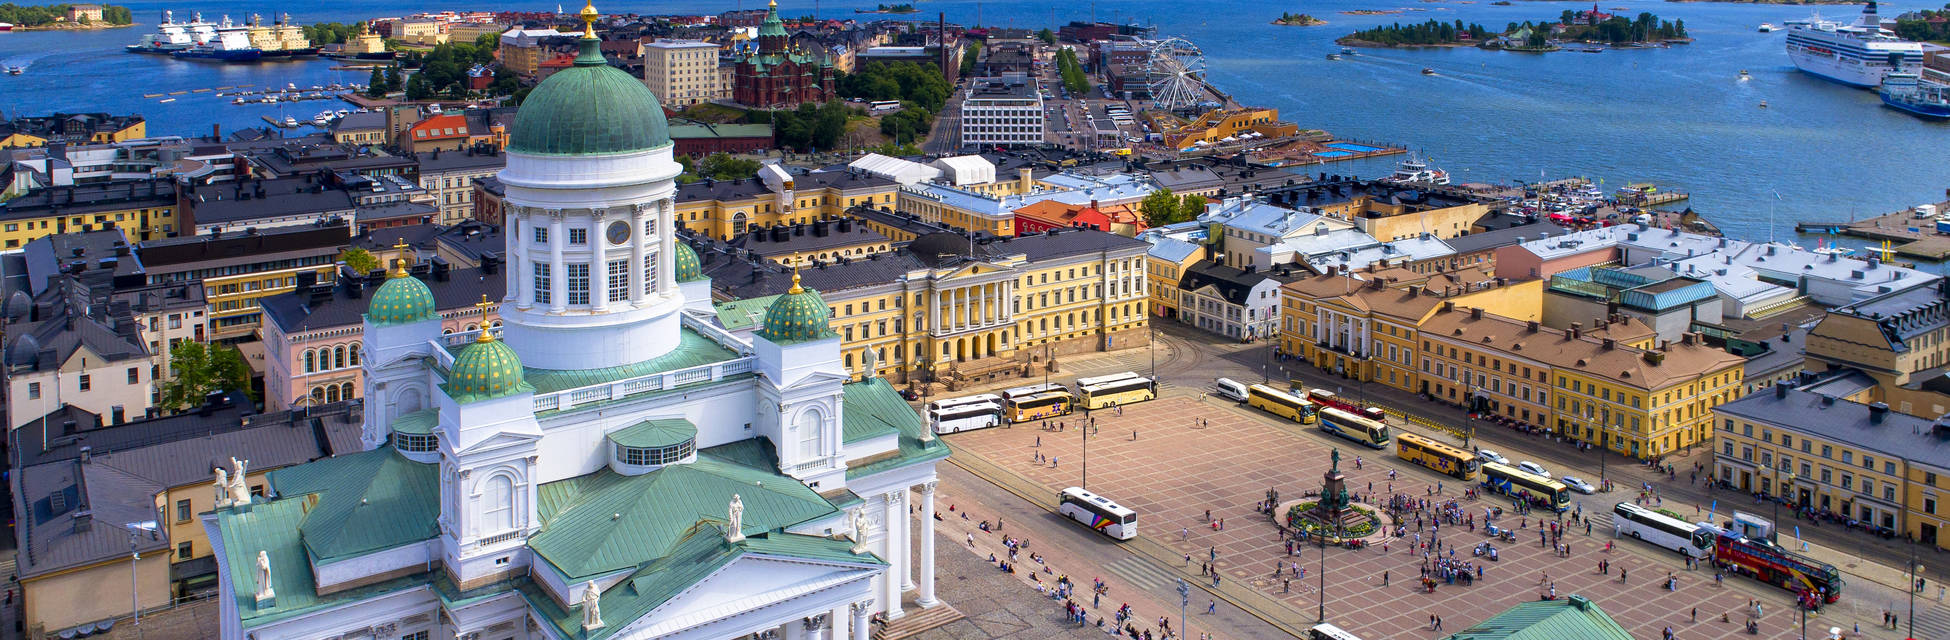 Helsinki-luchtfoto-AdobeStock_261651684.jpg